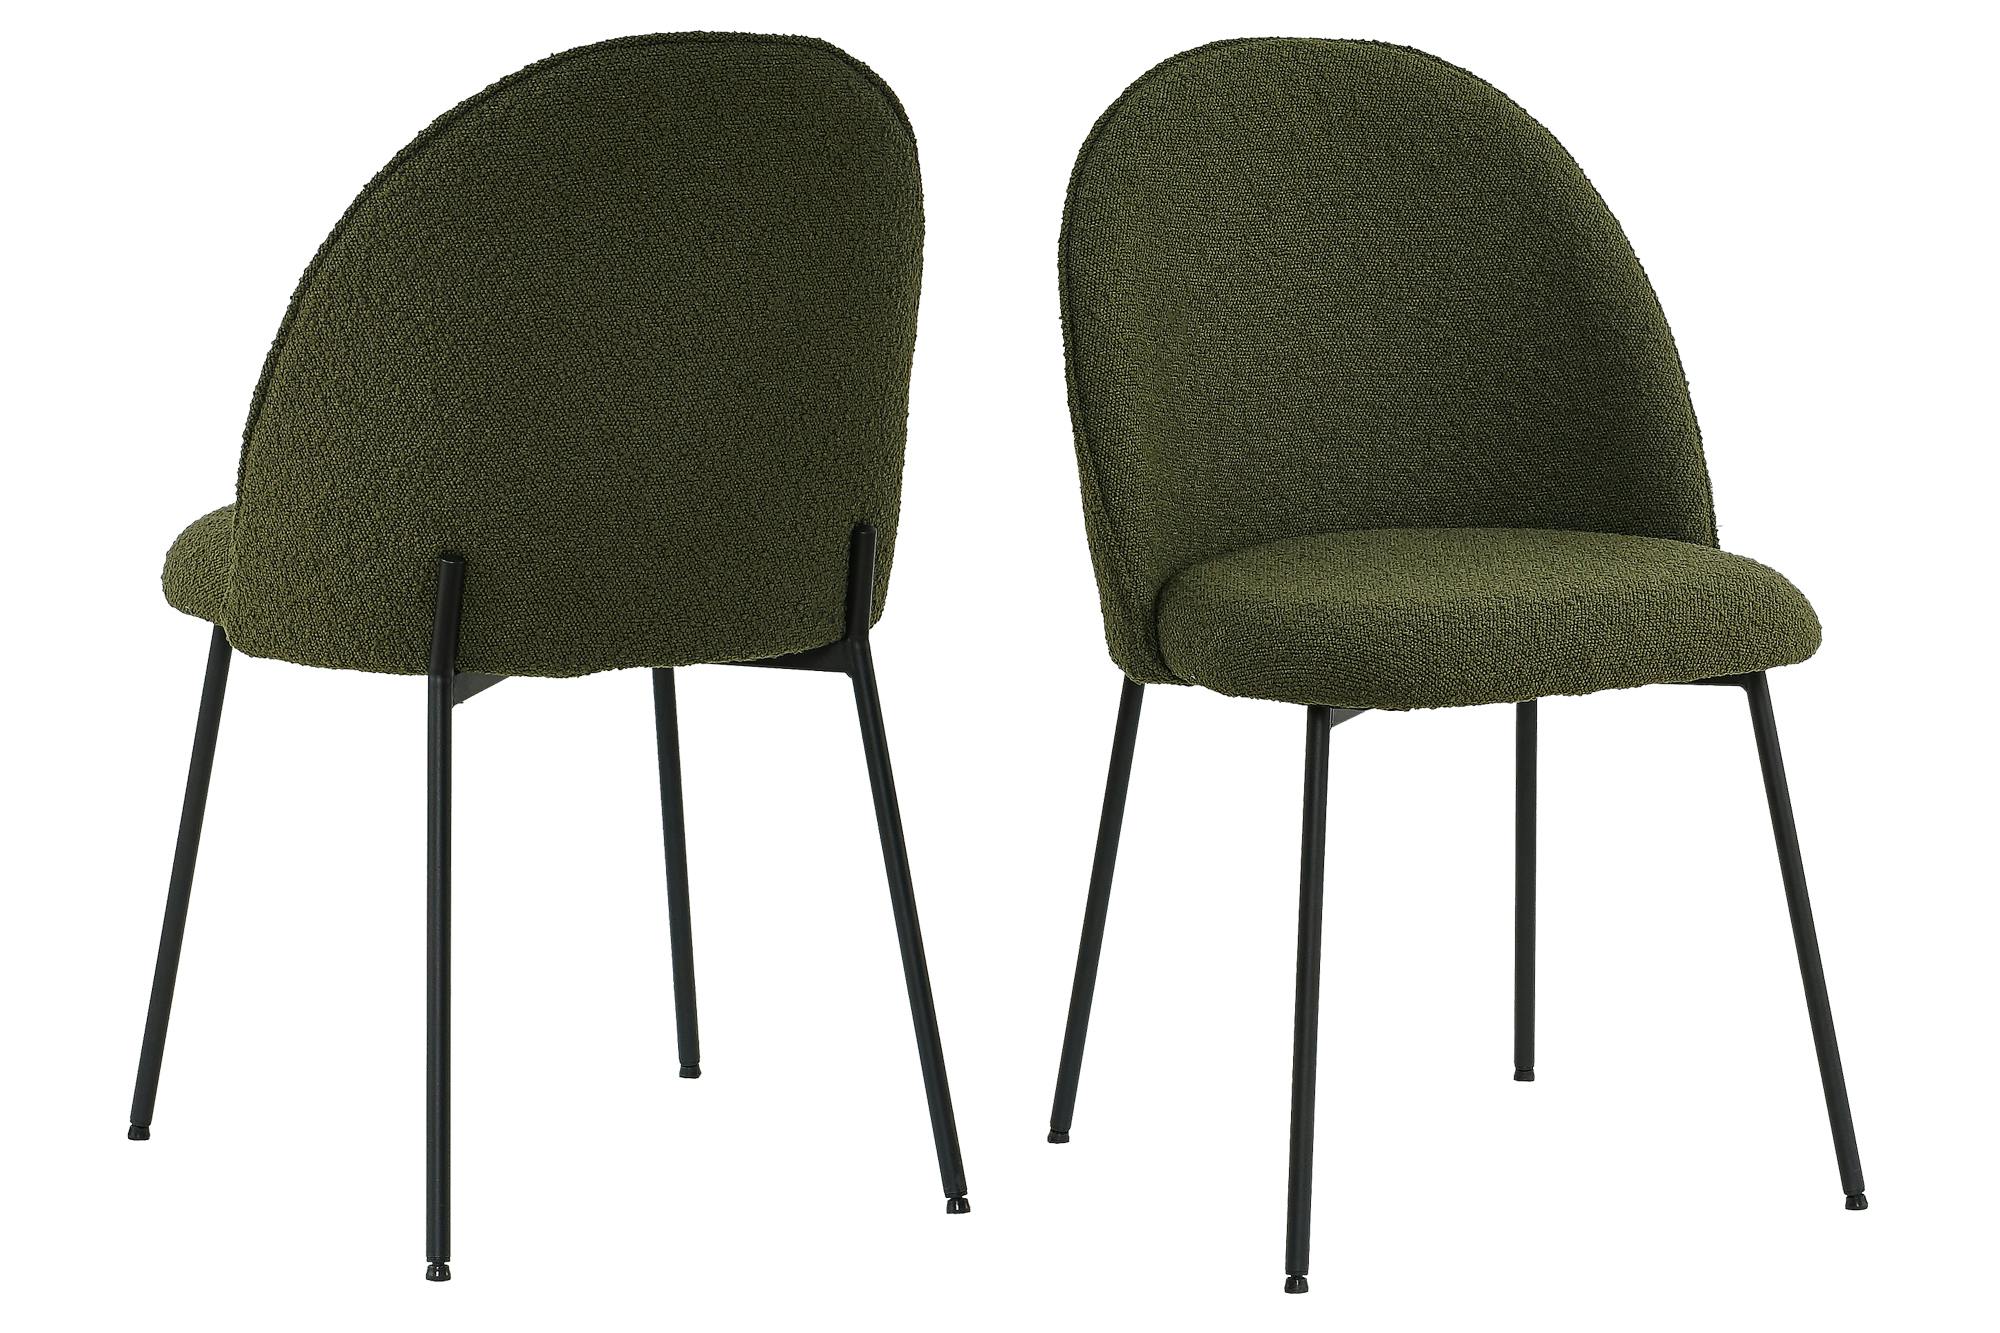 Marktplatz SIT&CHAIRS Chair | T-Bouclé METRO Möbel | schwarz Pad Metall SIT Stuhl | Tom Tailor Beine |Serie |02412-03 grün| | gepolstert B57xT54xH52cm 2er-Set